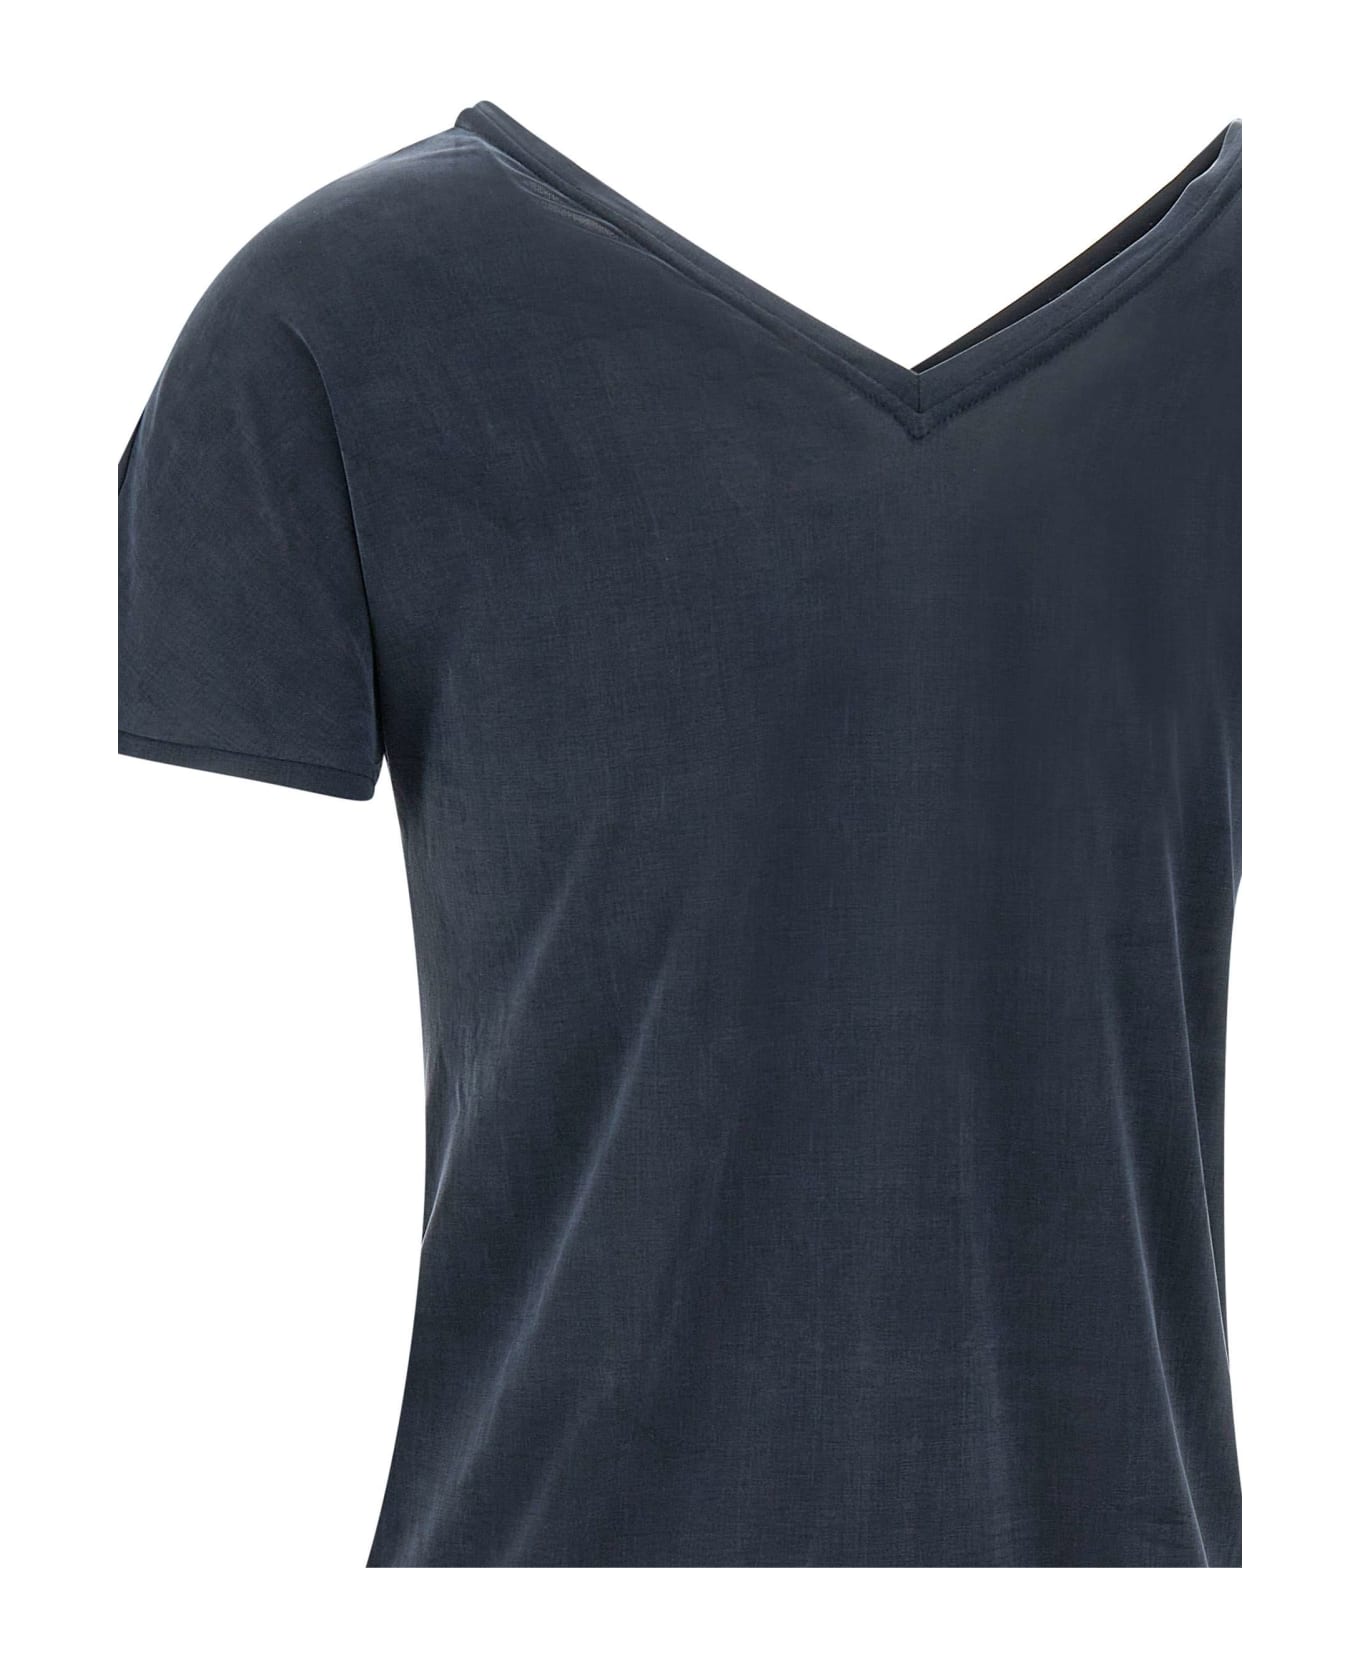 RRD - Roberto Ricci Design Cupro Fabric T-shirt T-Shirt - BLUE BLACK